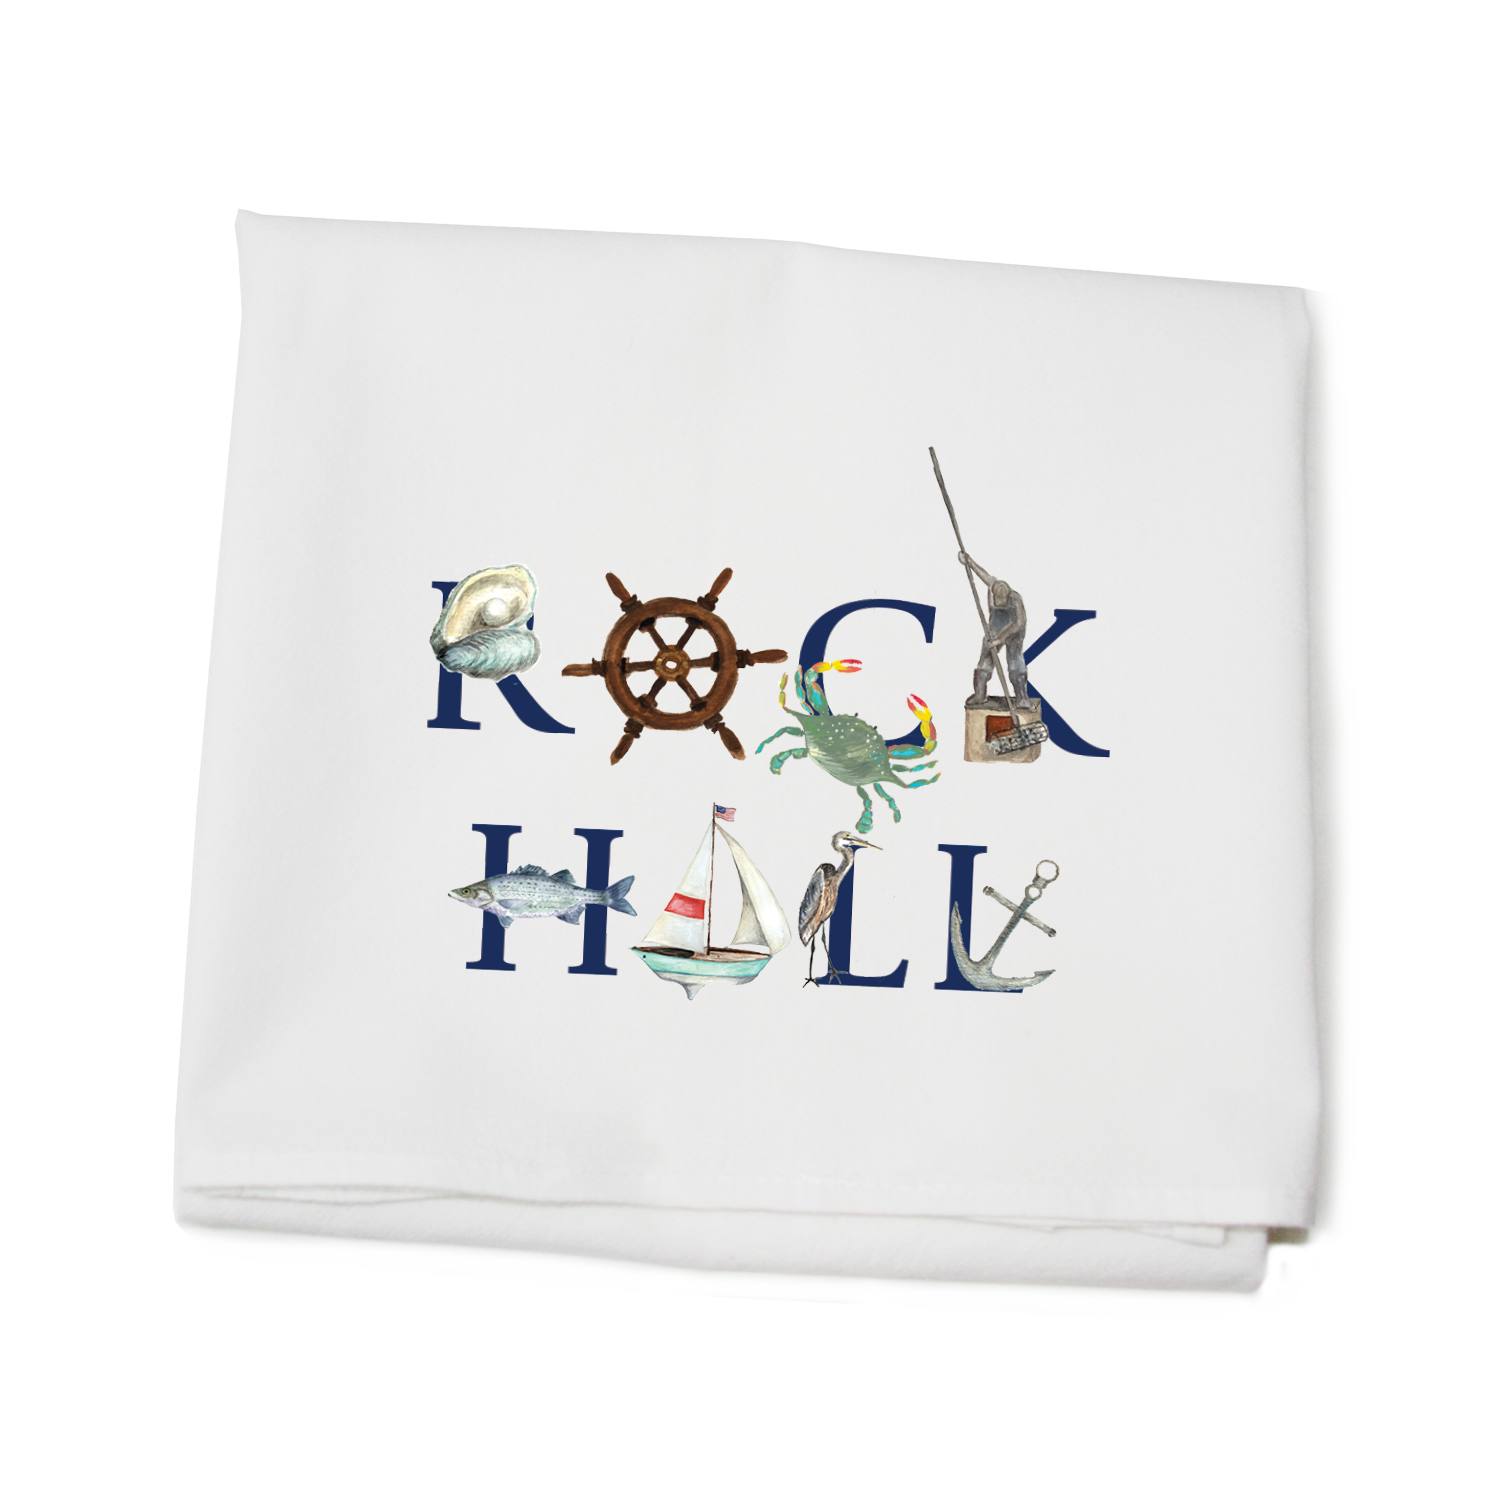 rock hall flour sack towel